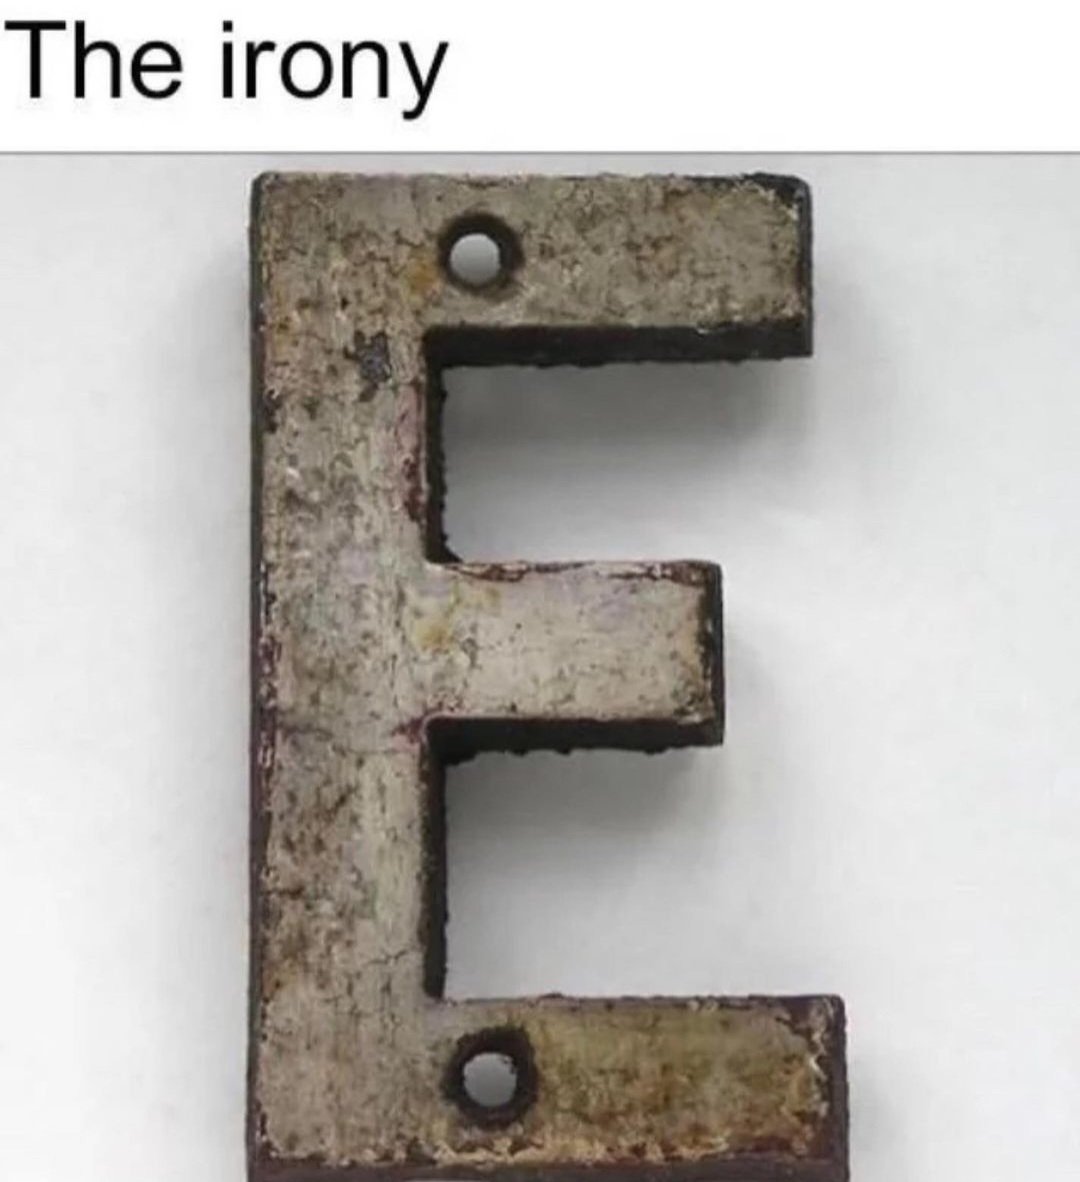 dank memes - iron e - The irony